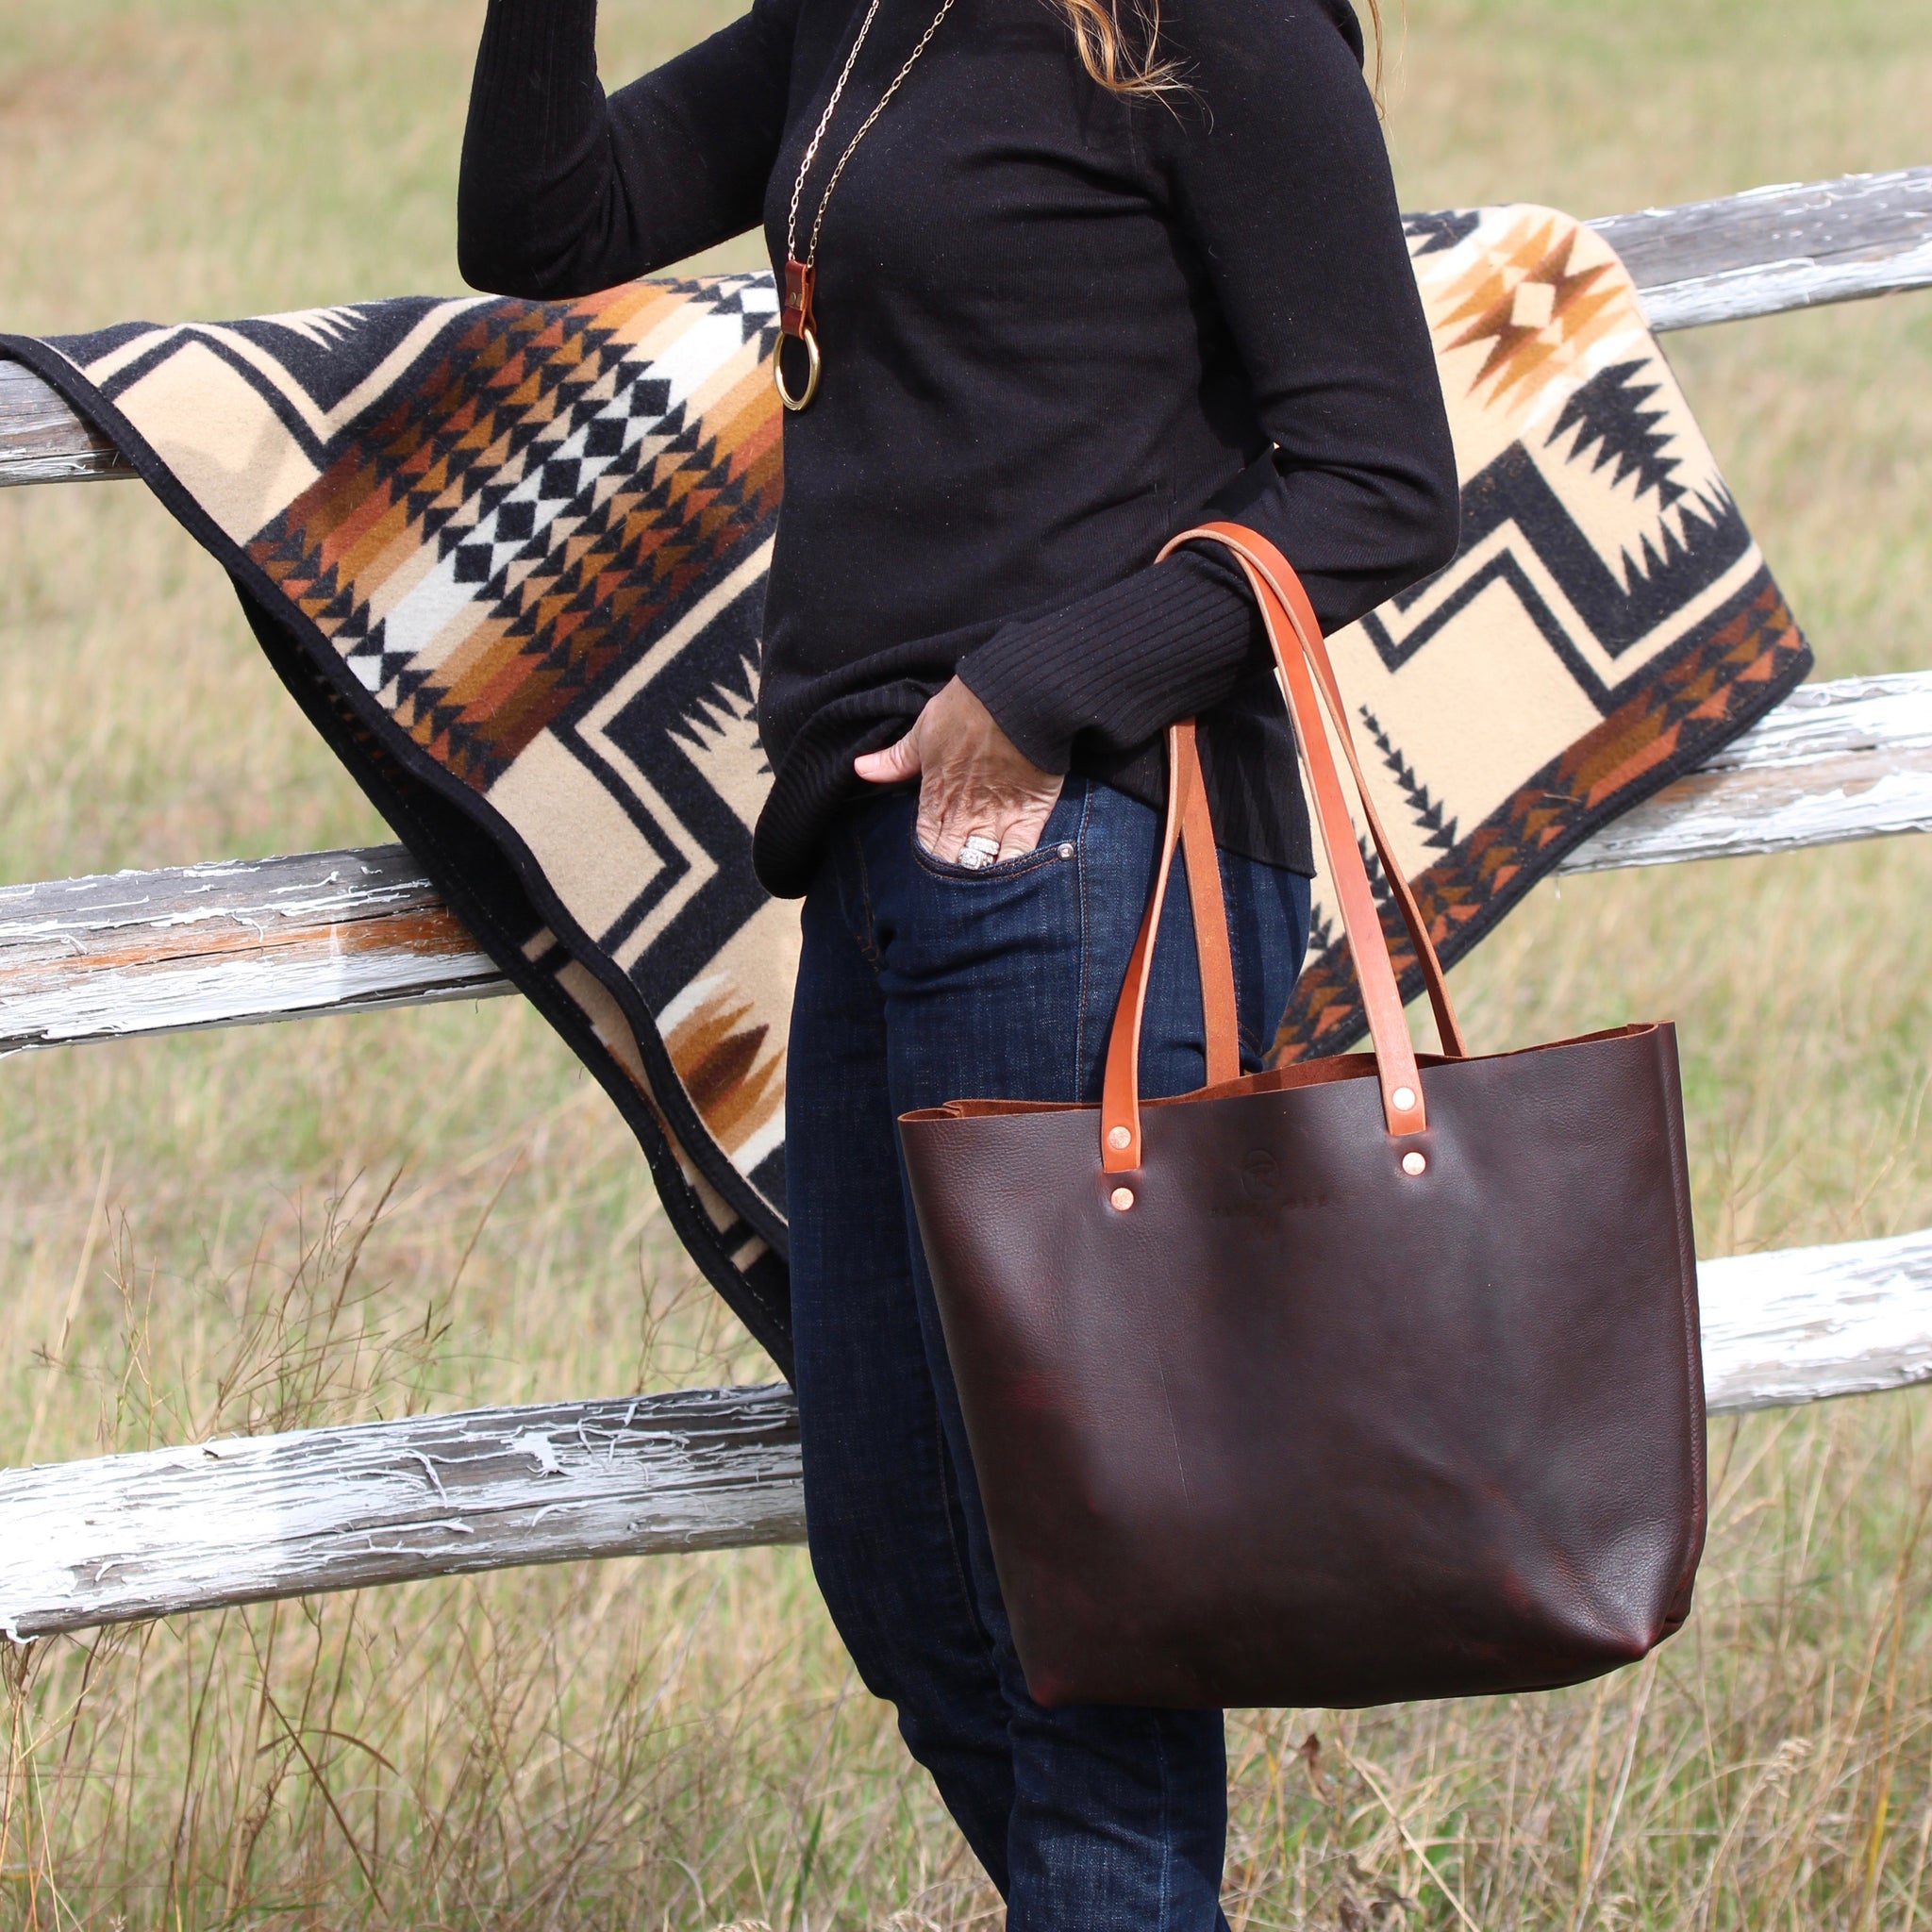 Brown Vintage Leather Crochet Bag Woven Bag Tote | Baginning